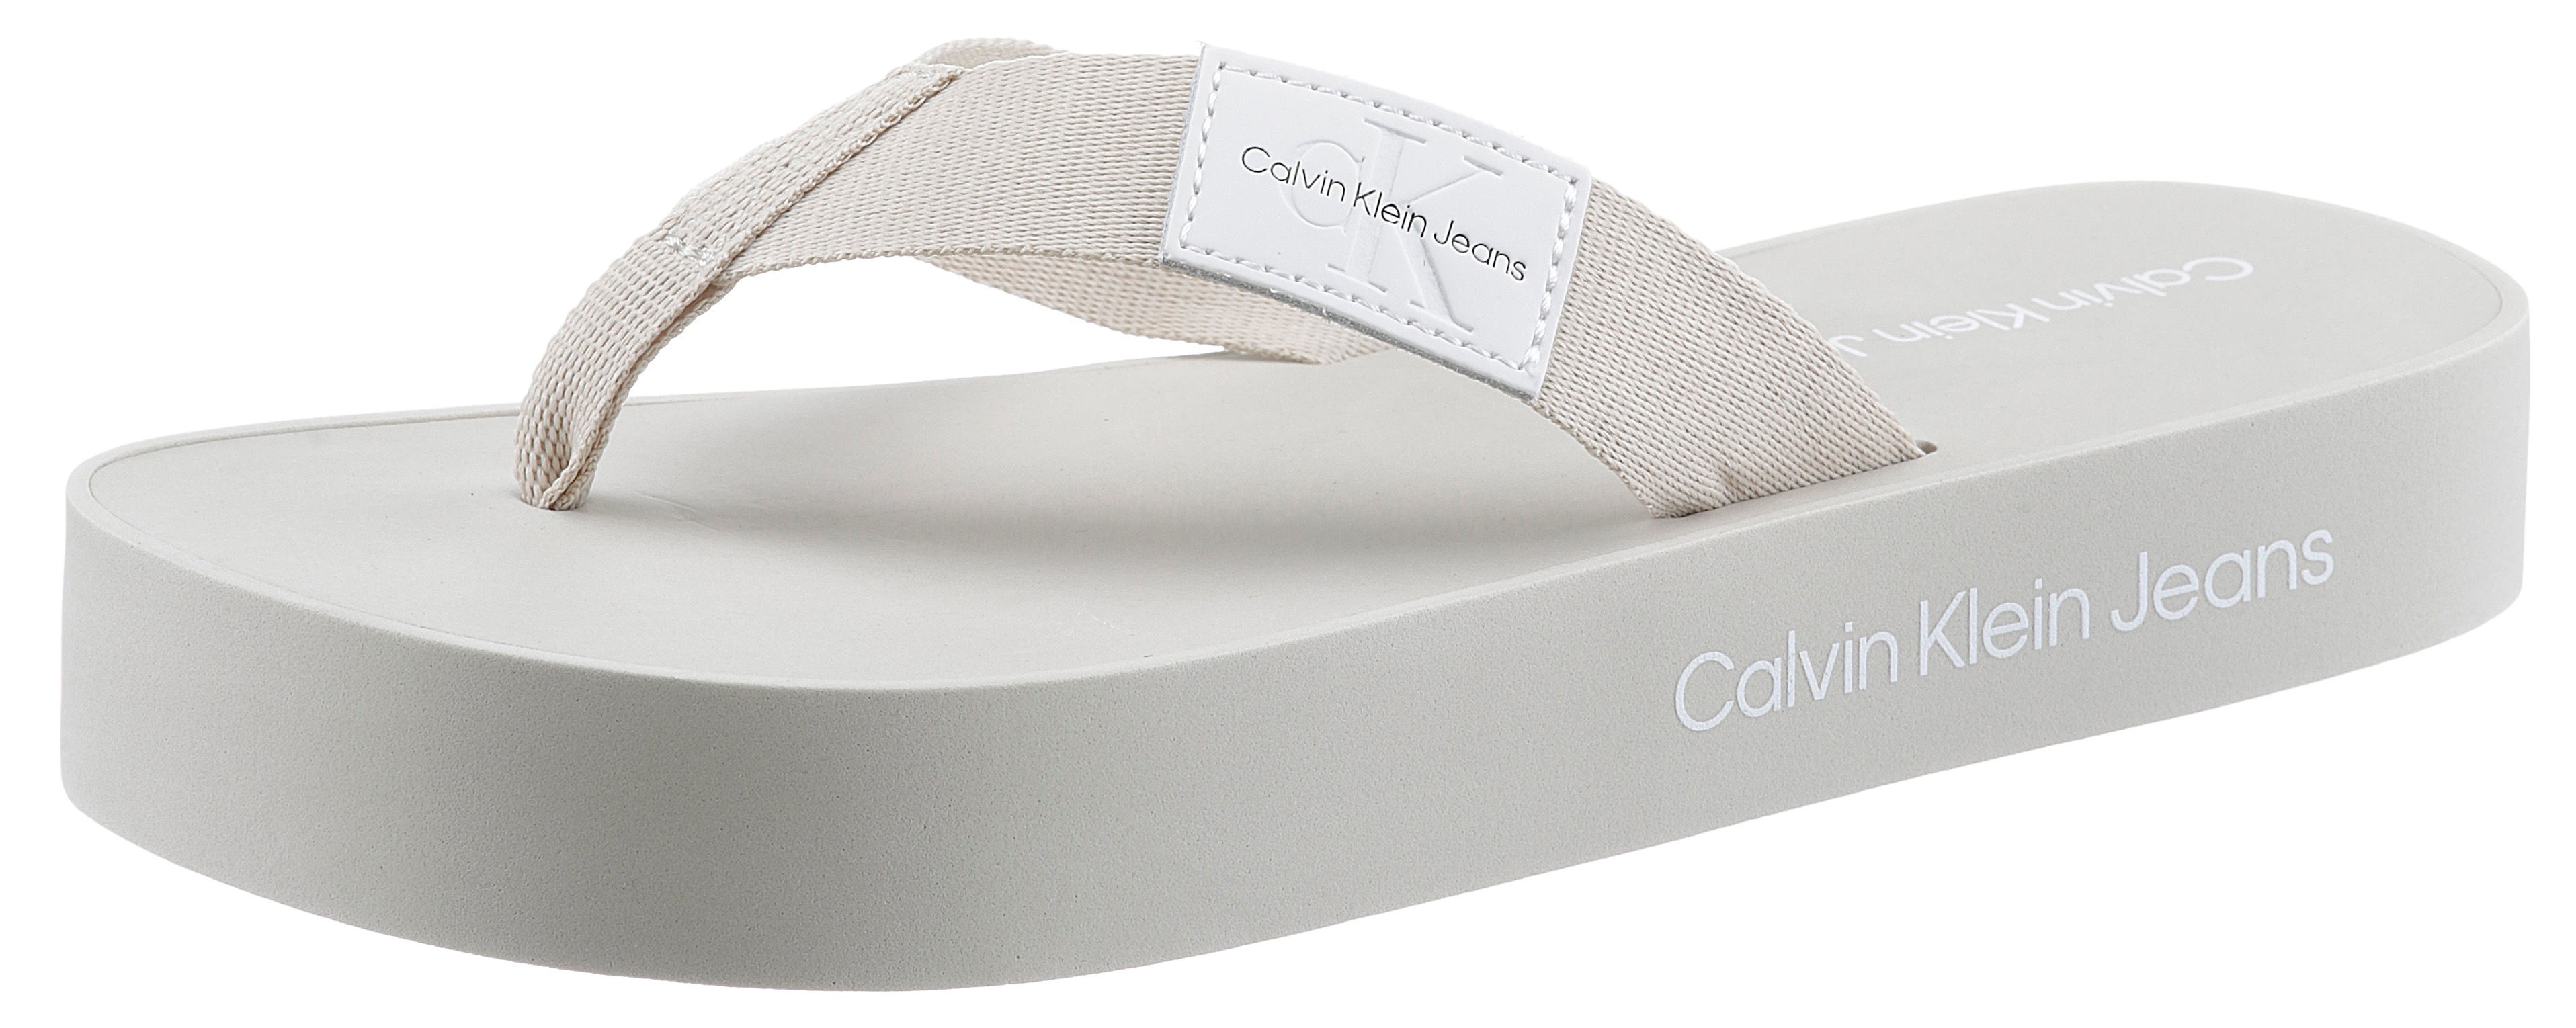 Calvin Klein Jeans Damen Flatform-Flipflop Flip Flop, eierschalenfarben, 36 EU